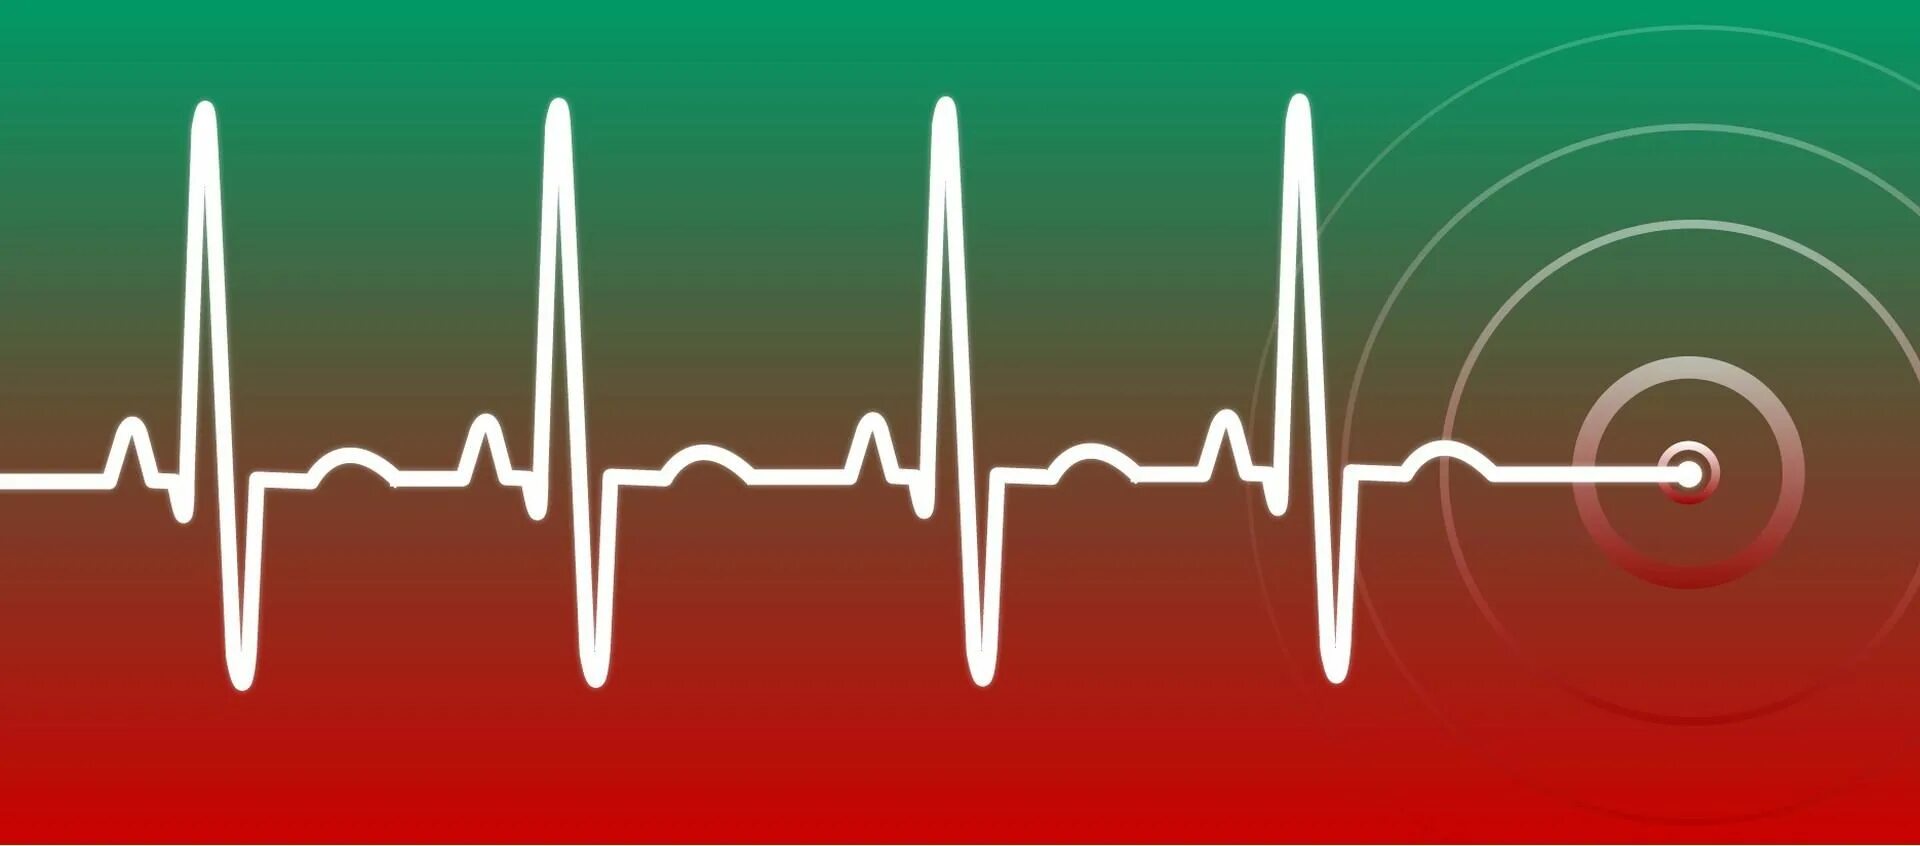 Легкое сердцебиение. Кардиограмма сердца. Ритм сердца. Пульс. Сердцебиение кардиограмма.